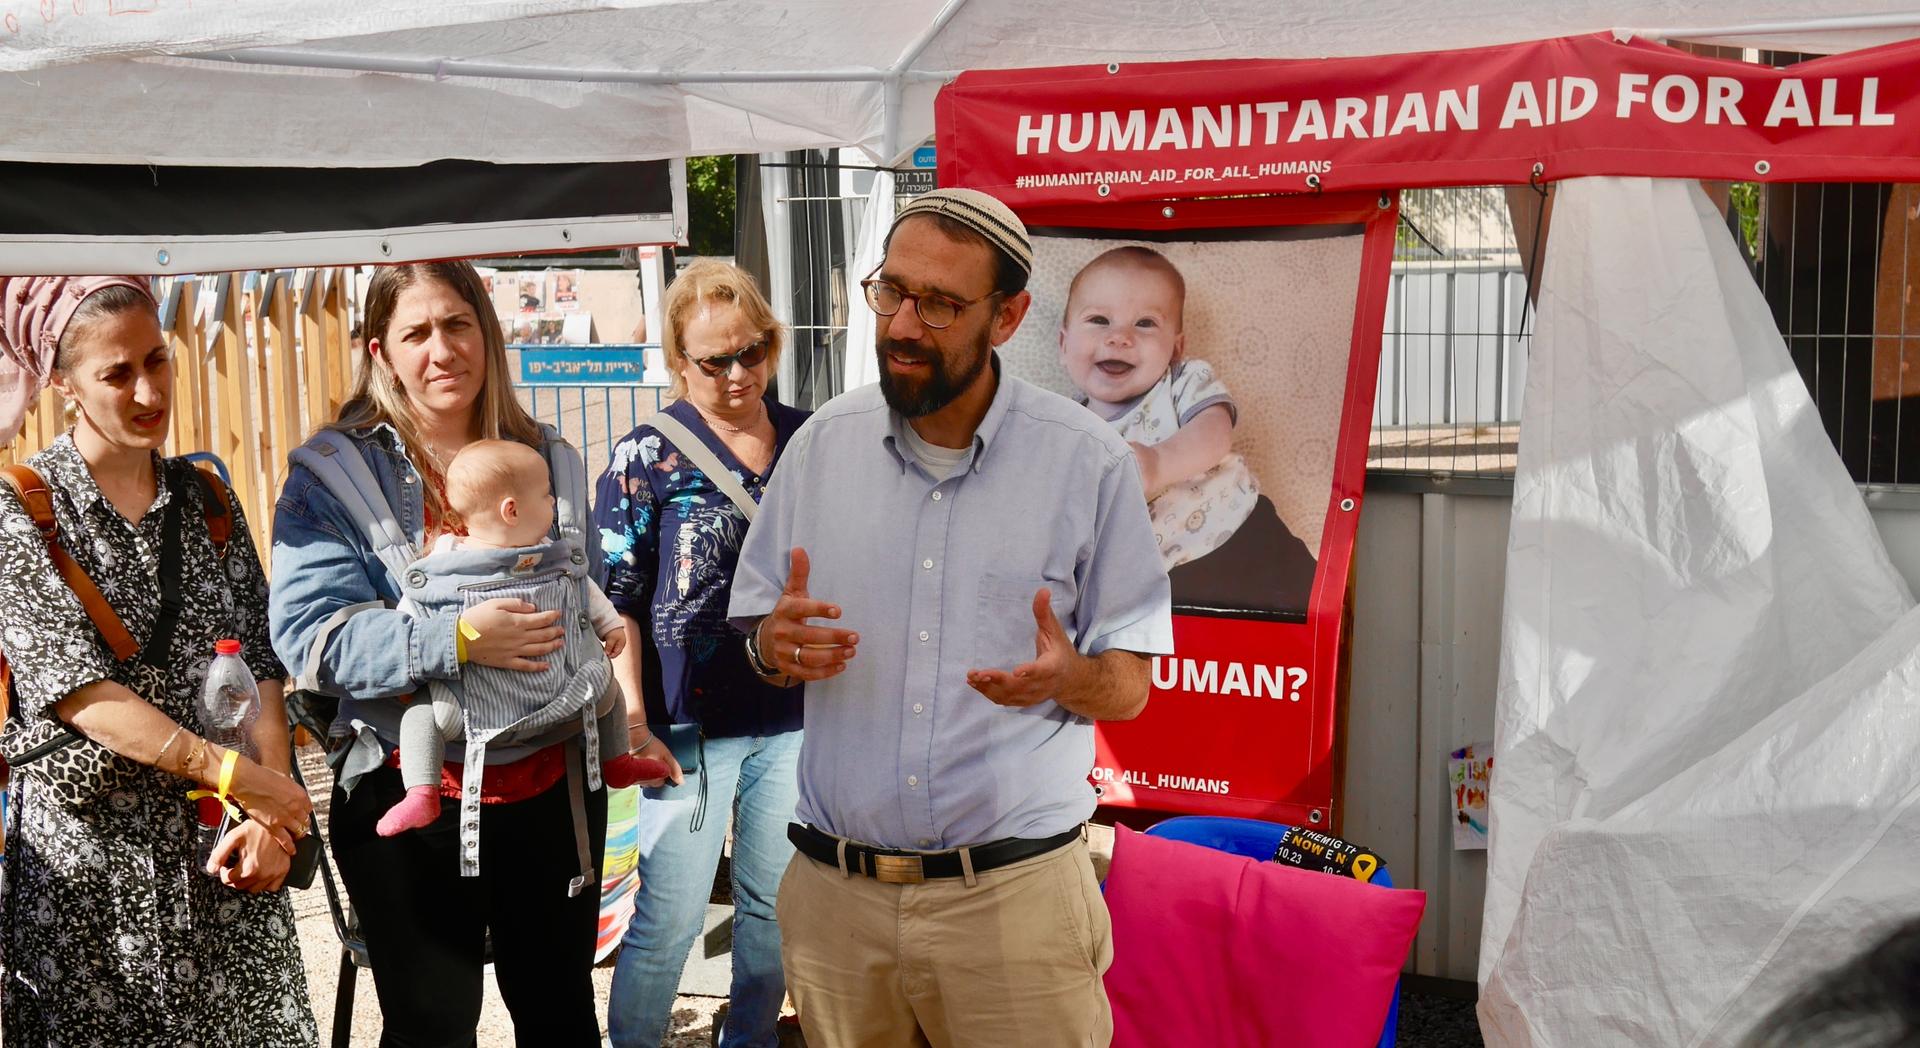 Rabbi Avidan Freedman began a one-man hunger strike last Friday. 